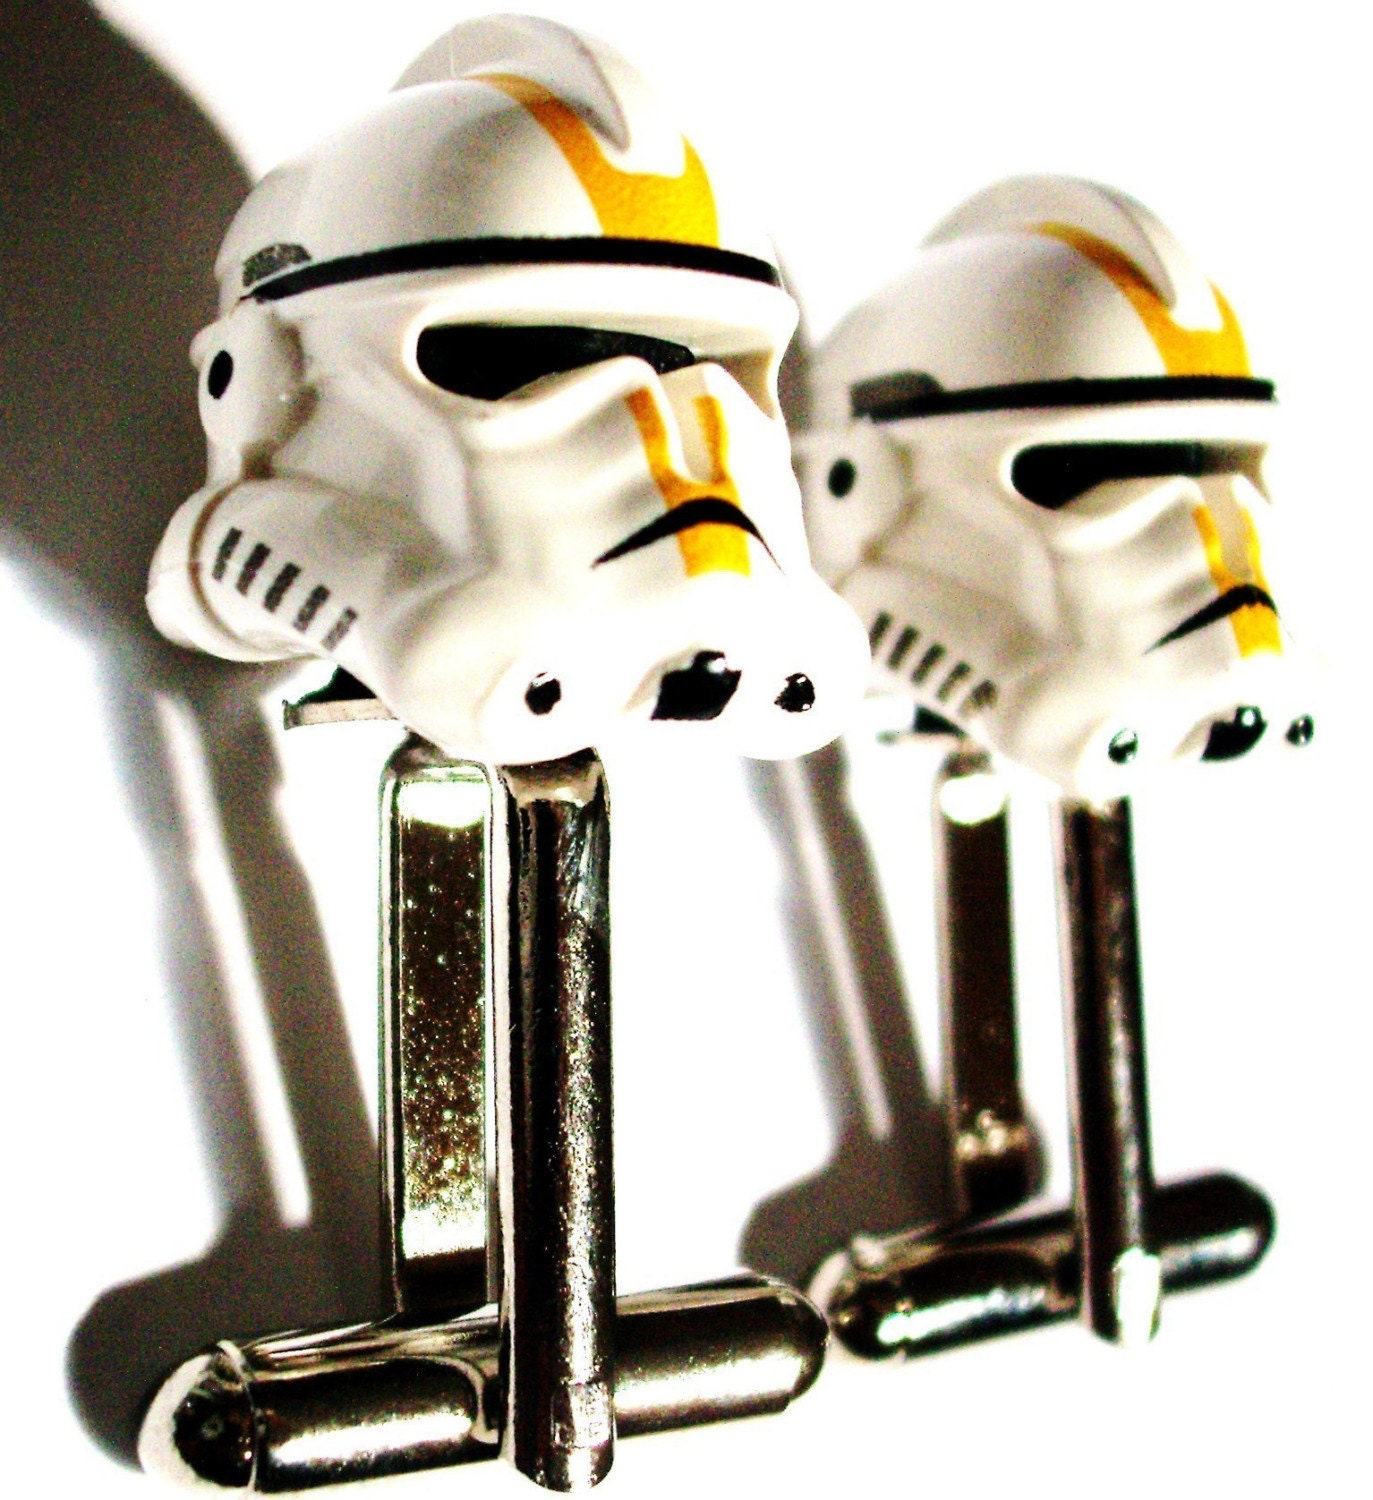 LAST PAIR- LEGO Star Wars Yellow Storm Trooper Helmet Cufflinks -FREE GIFT BAG- Retro Man Guys Dad Fun Gift 80's Dork Boy Groom Groomsmen Fathers day